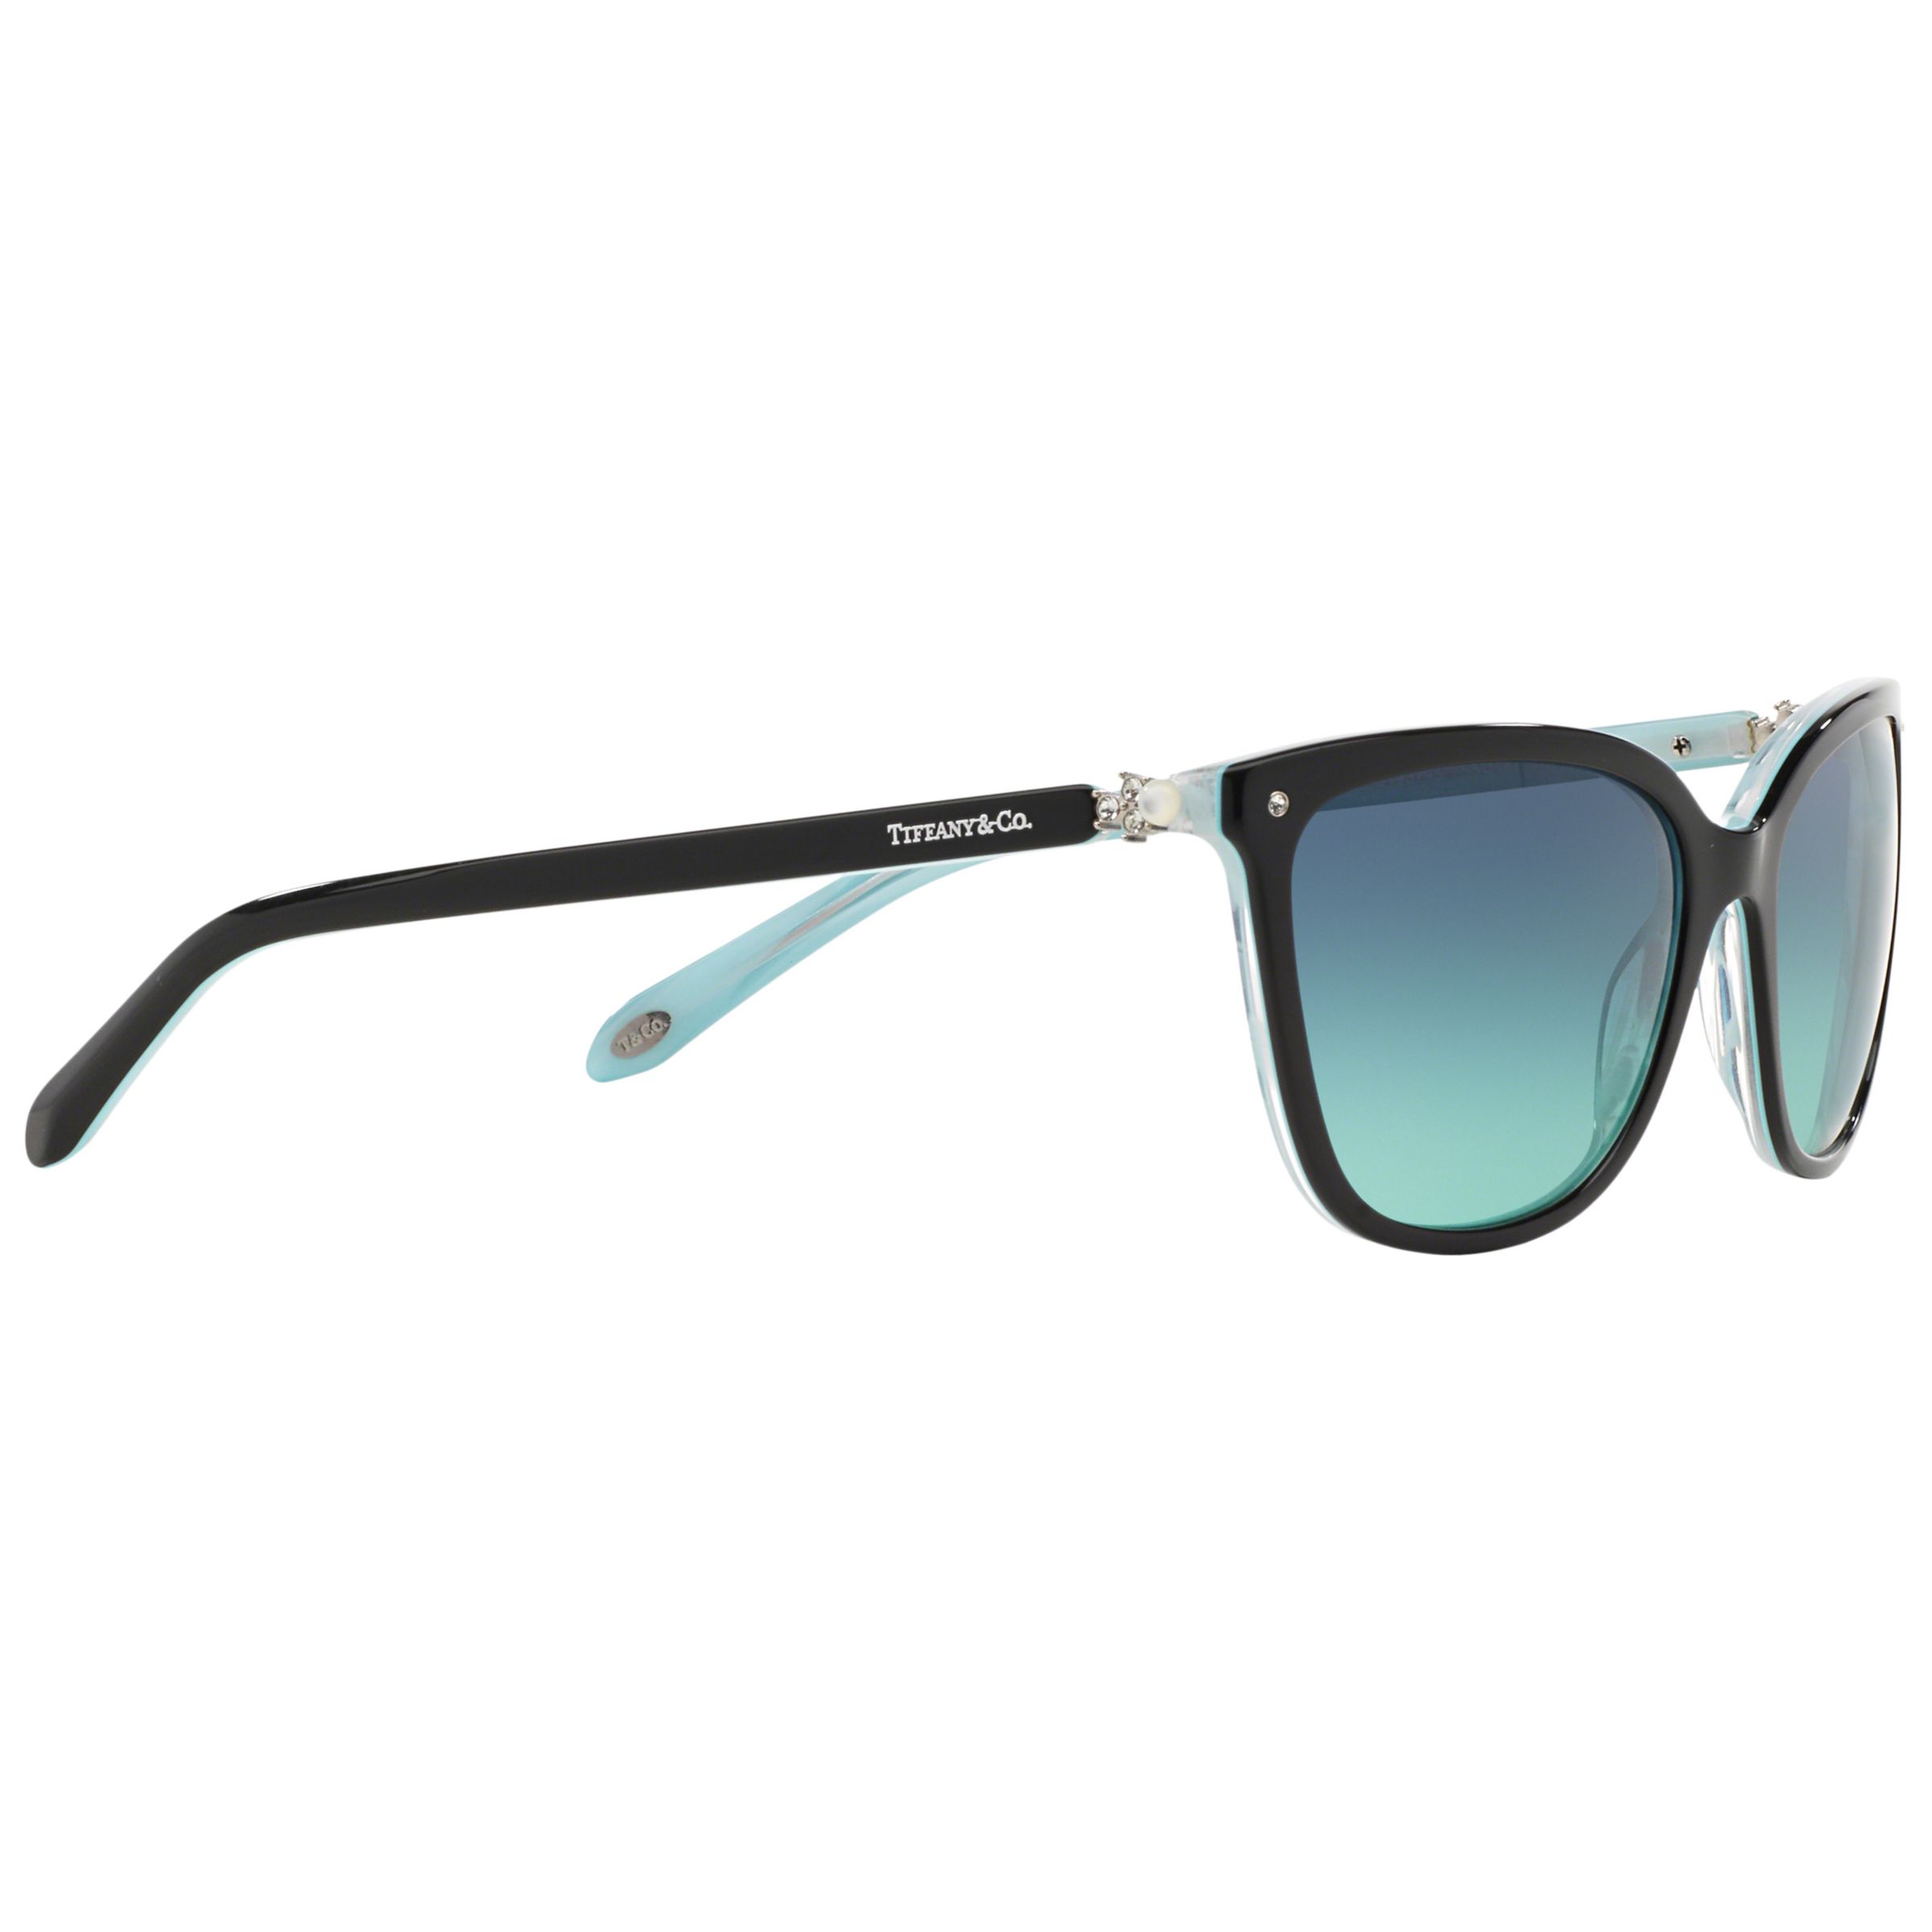 Tiffany Aria sunglasses with blue frames